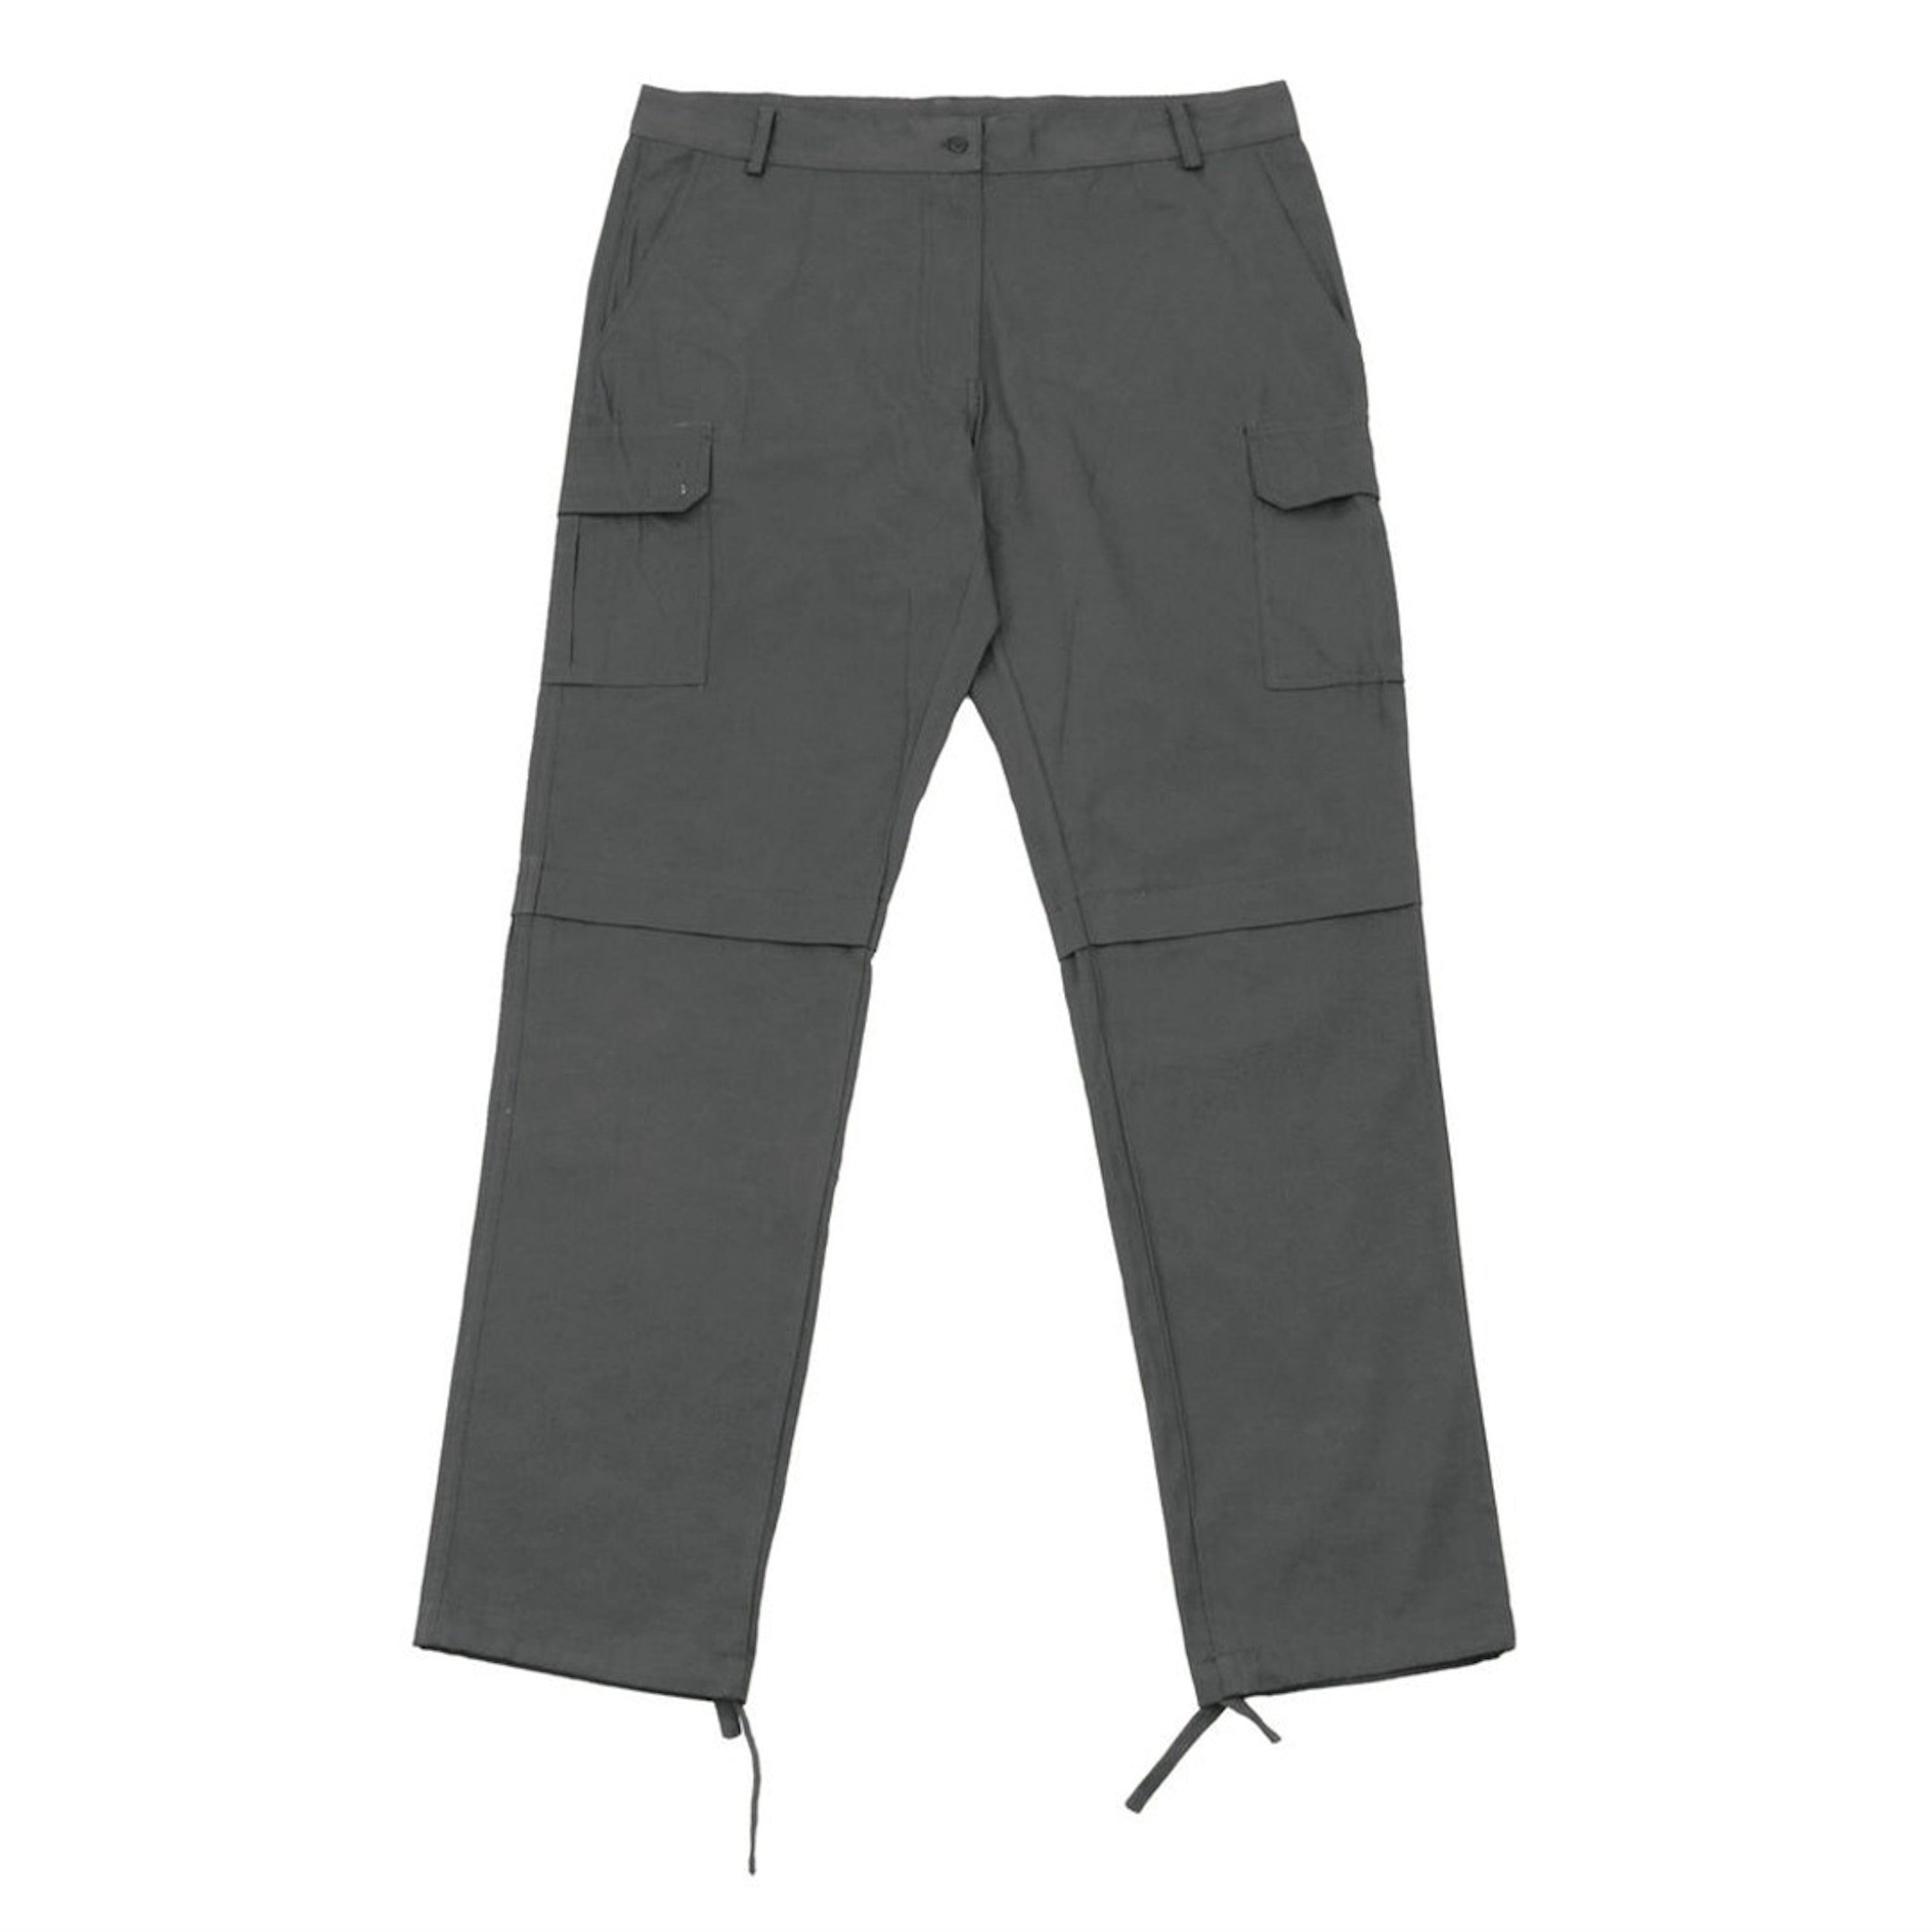 Feedz Cargo Pants - Dark grey